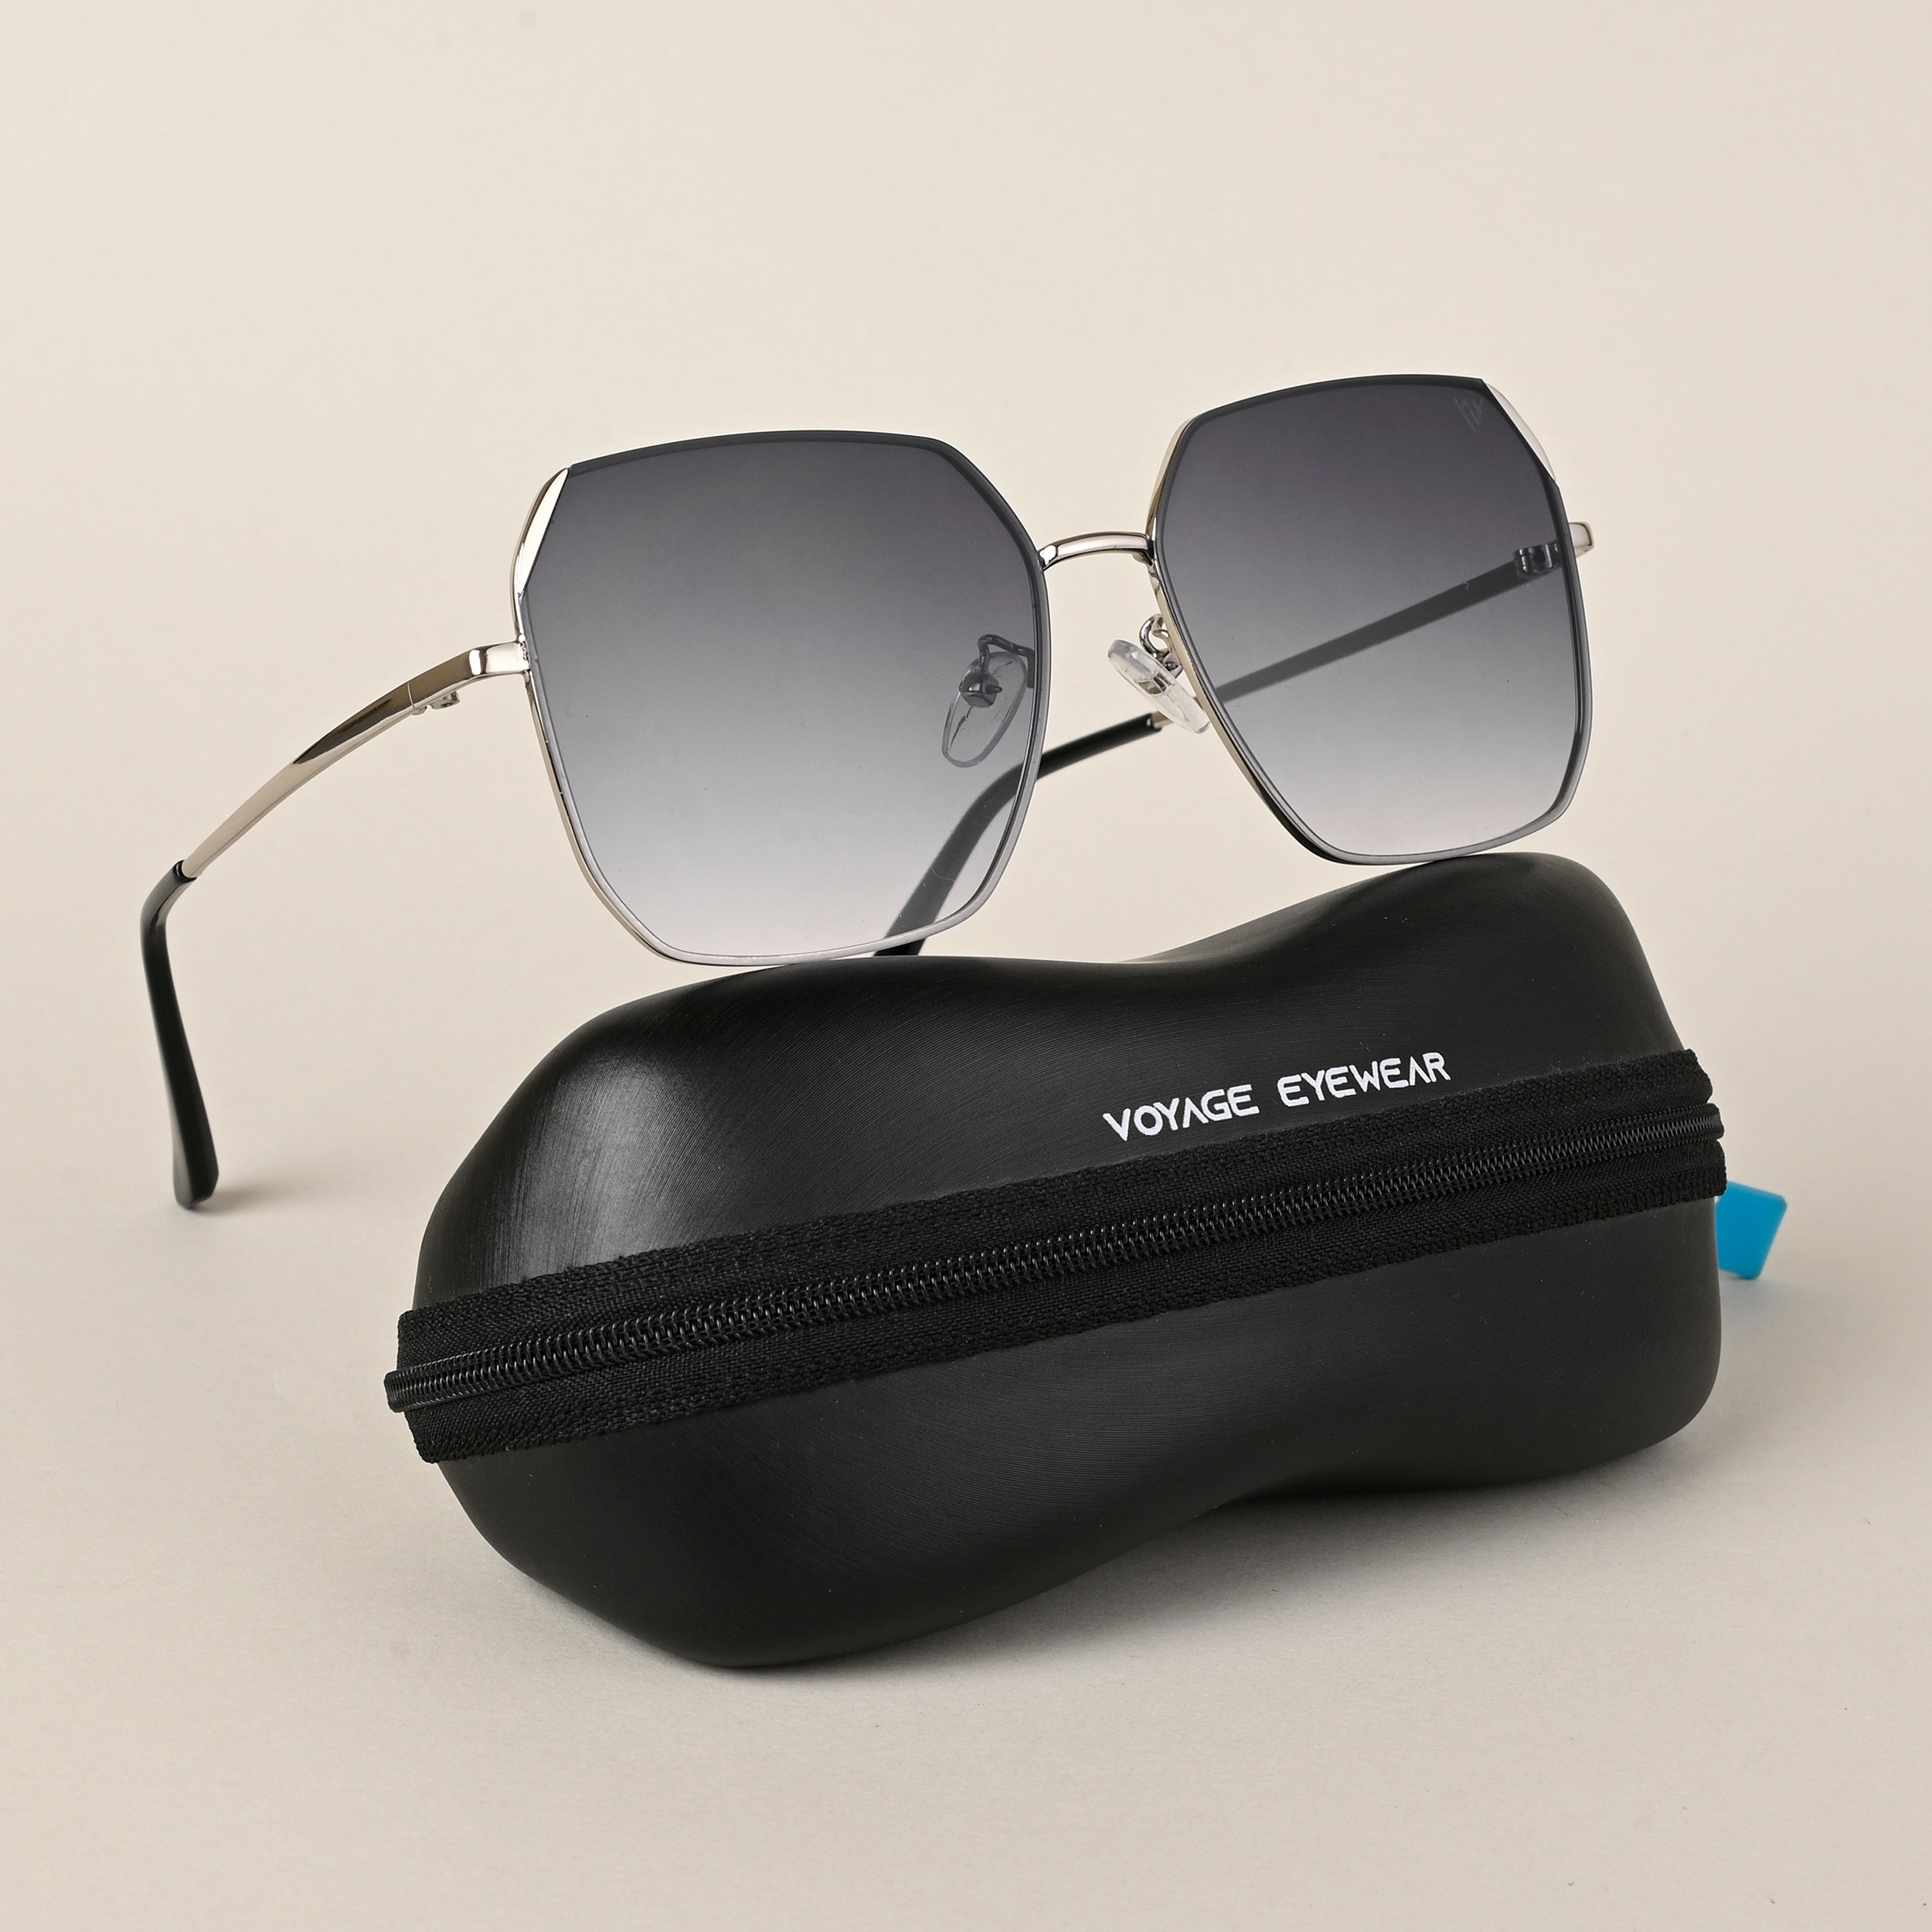 Voyage Grey Square Sunglasses for Men & Women - MG4339